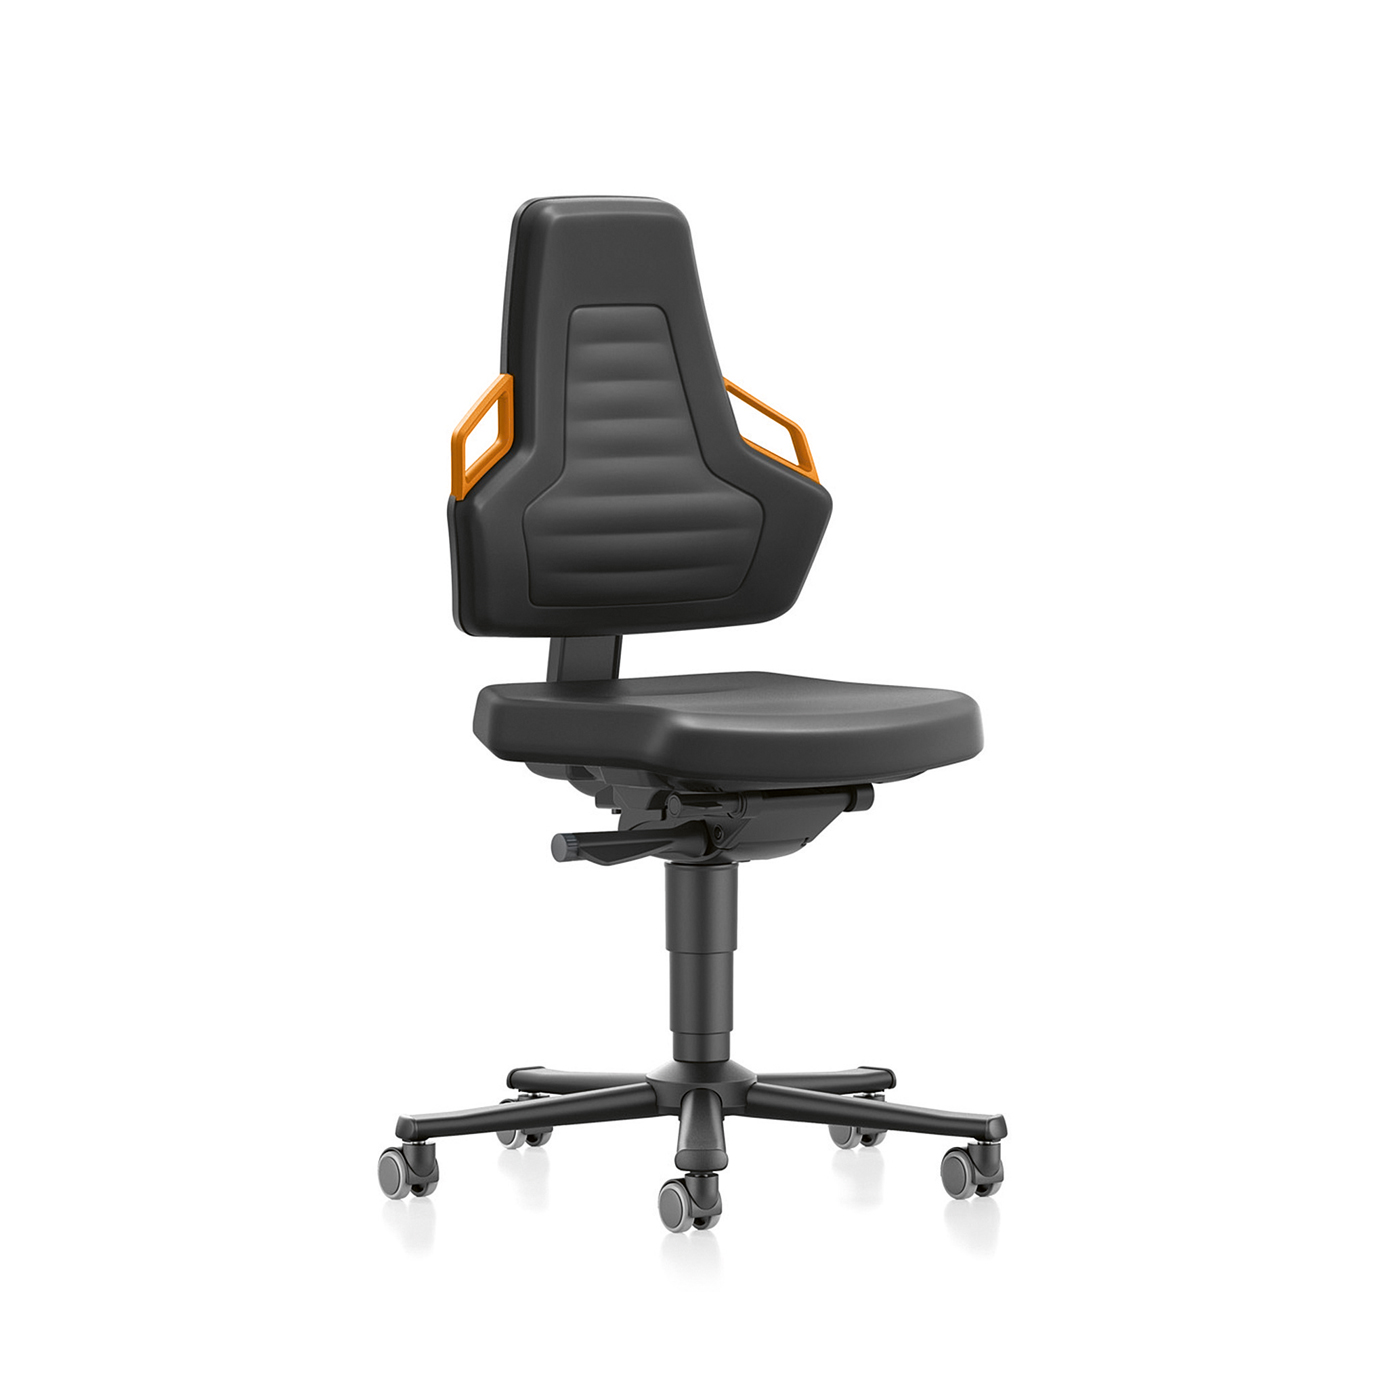 Nexxit 2 Swivel Chair, Integral Foam Black/Orange - 1 piece